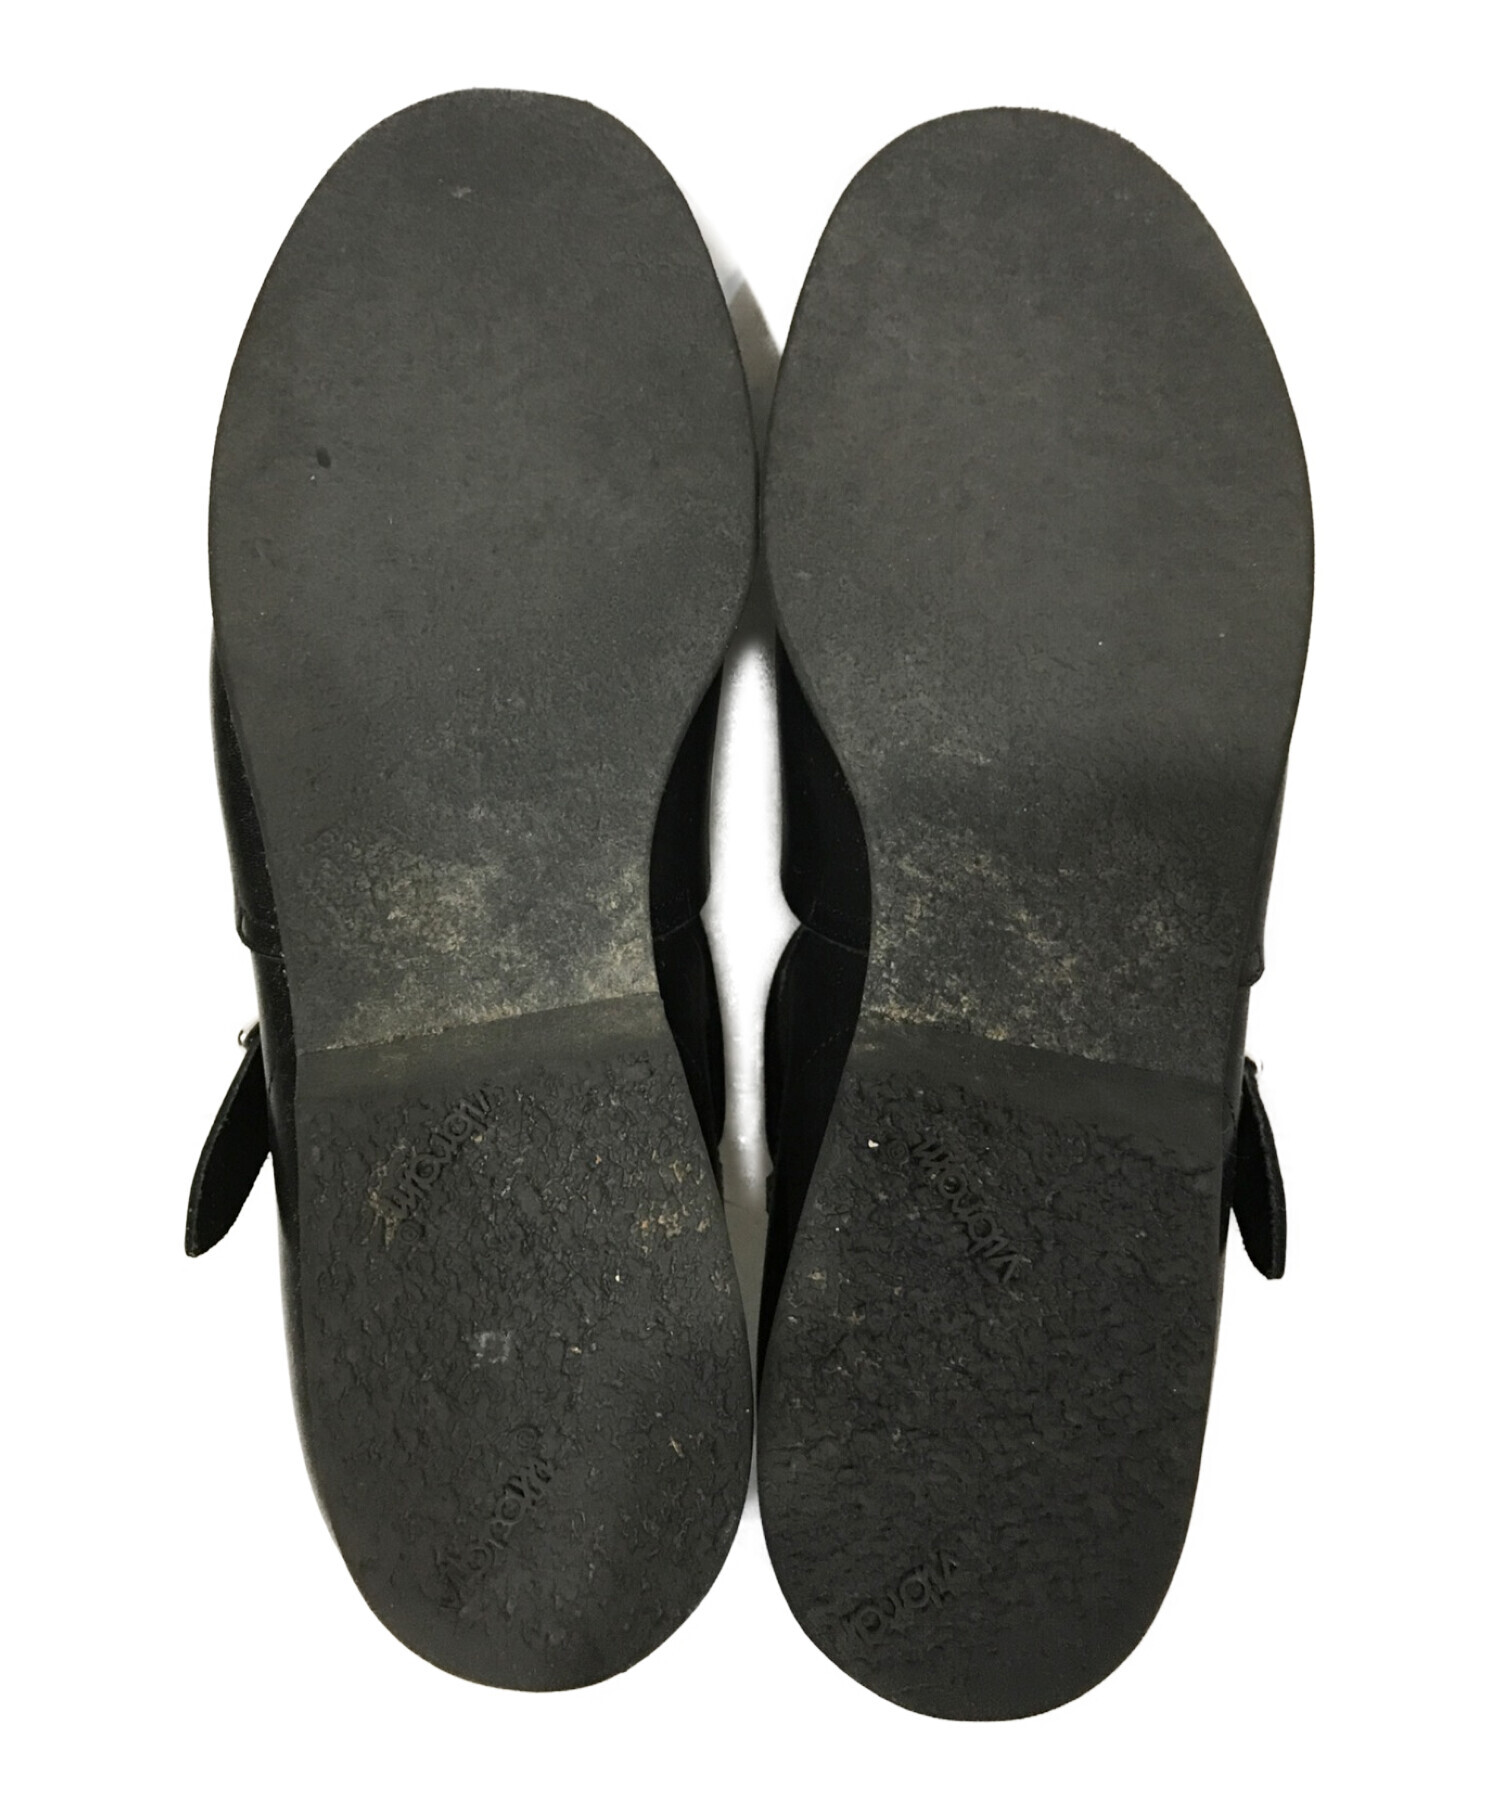 foot the coacher (フットザコーチャー) T-strap shoes ブラック サイズ:8